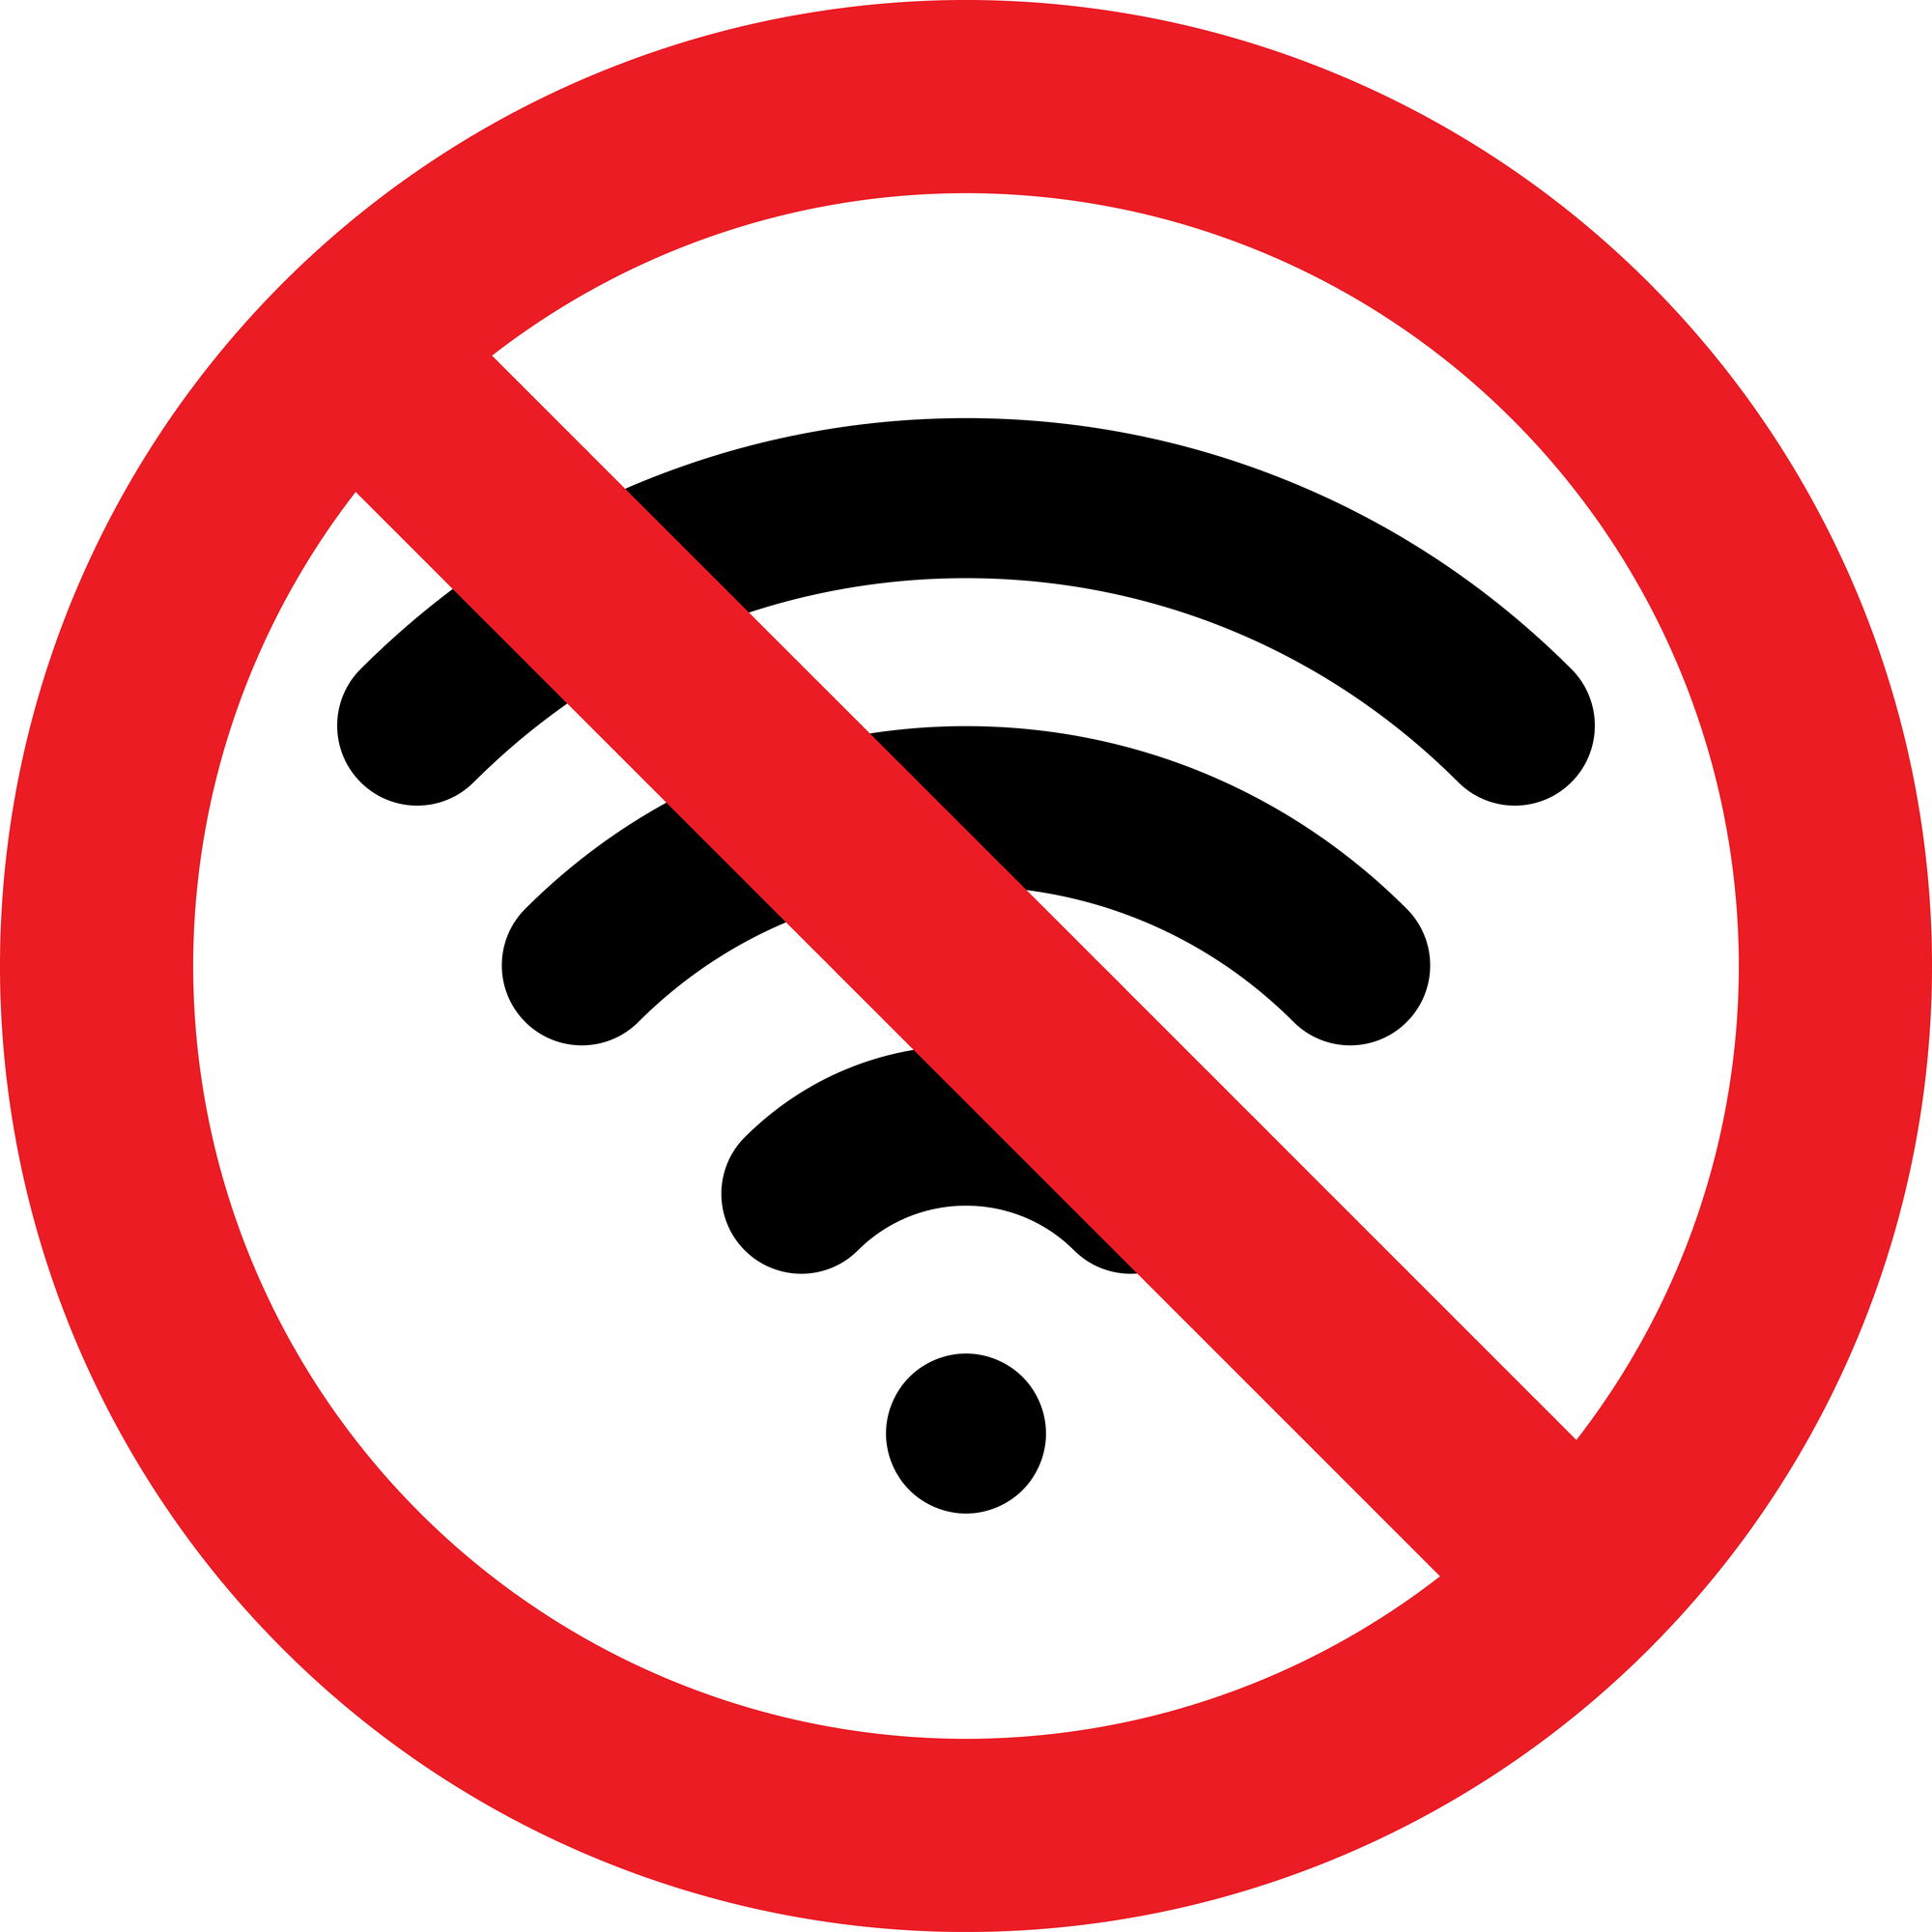 no internet/wi-fi signal sign